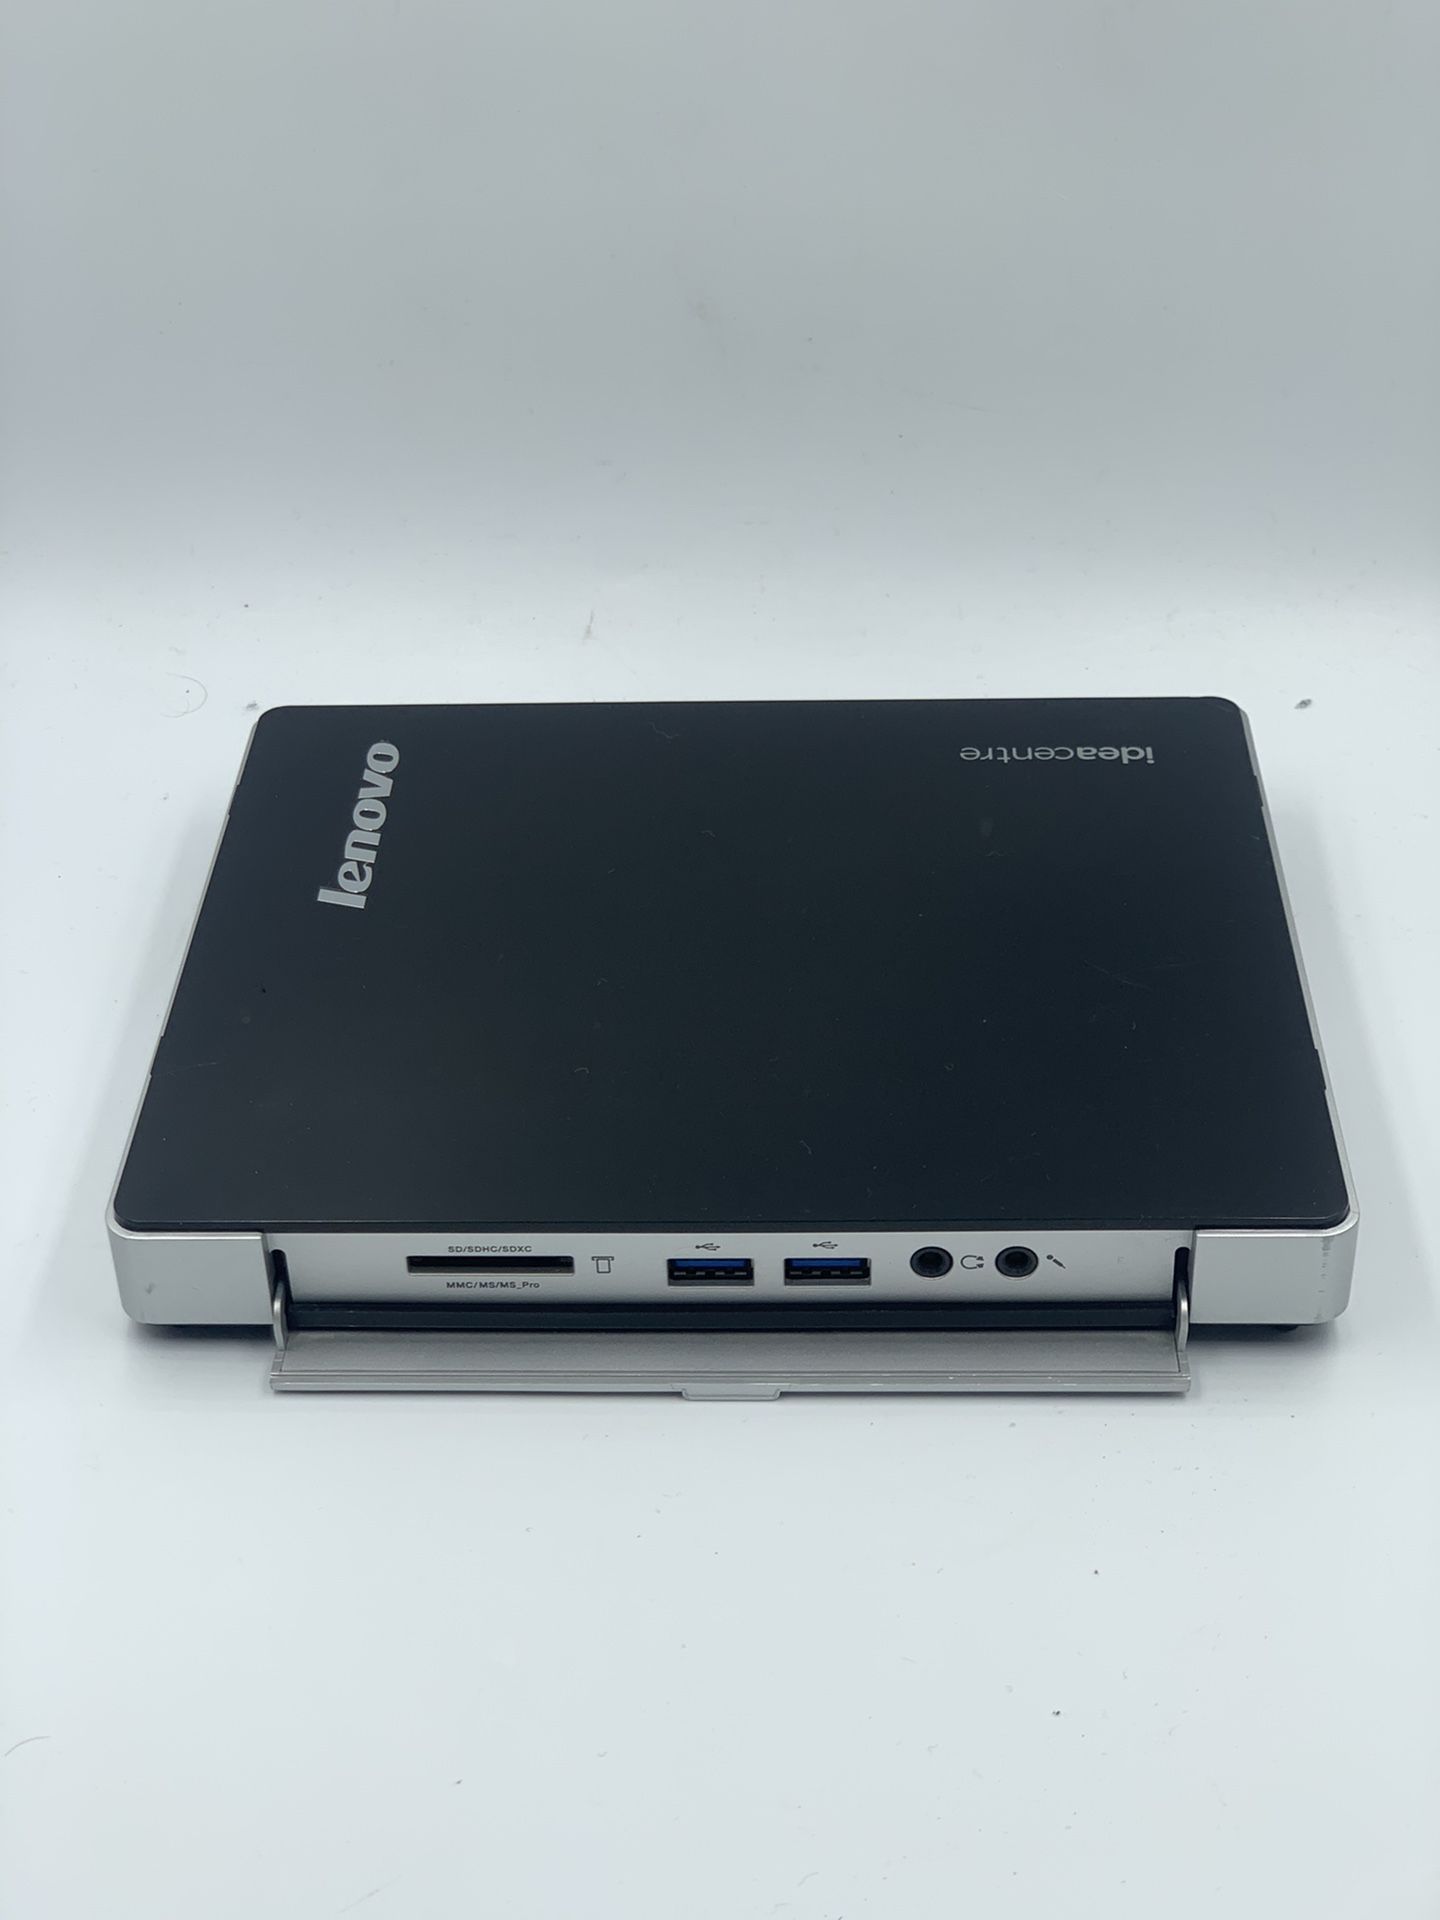 Lenovo Ideacentre Q190 Celeron DC 1.6 4GB 120GB SSD Mini Desktop PC